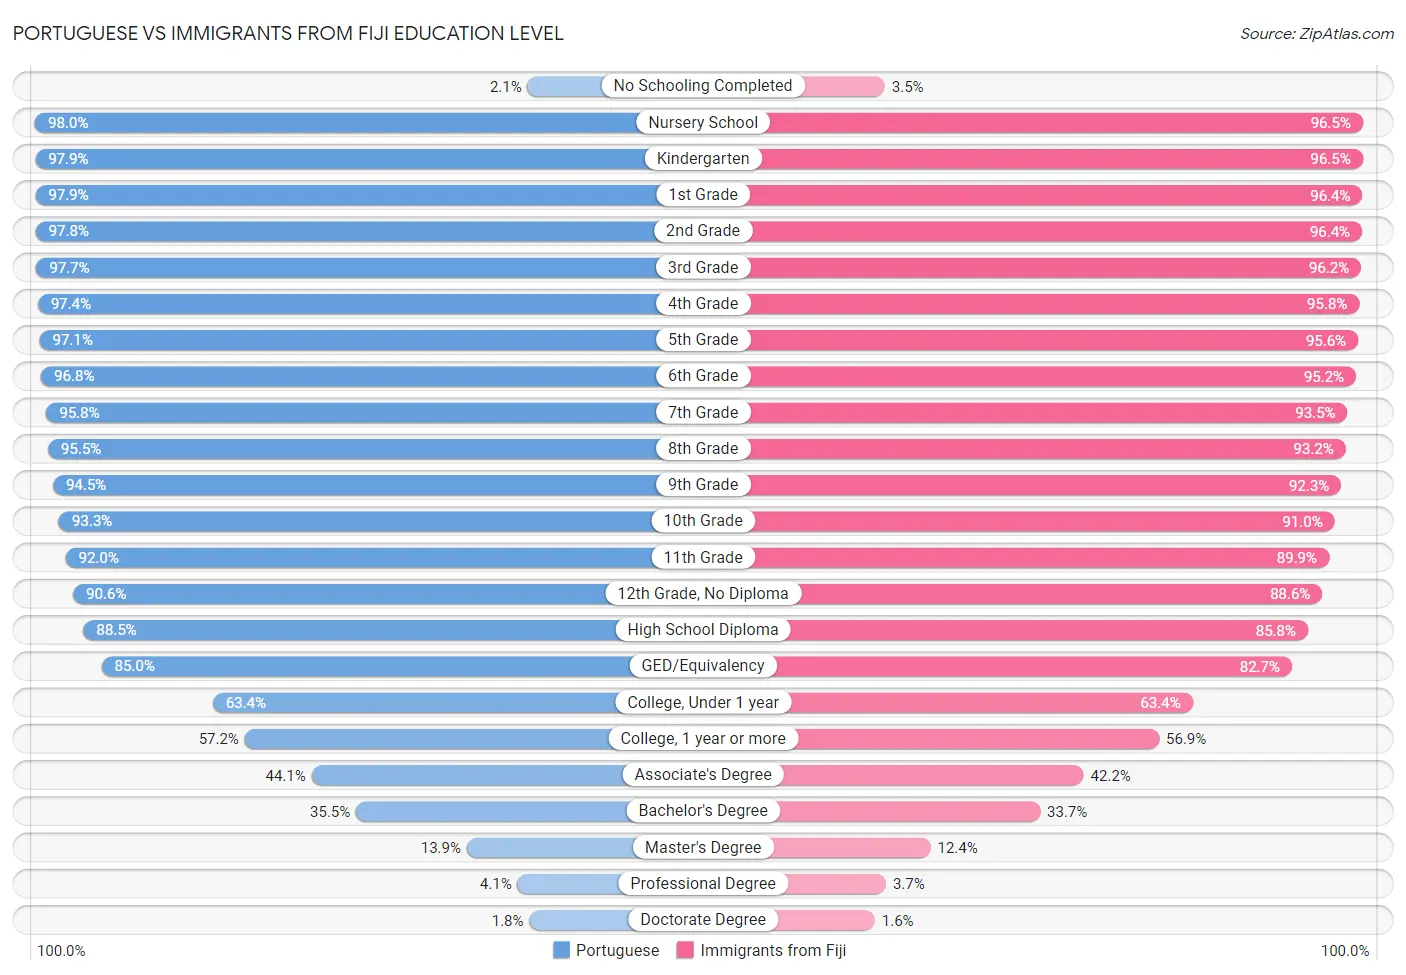 Portuguese vs Immigrants from Fiji Education Level